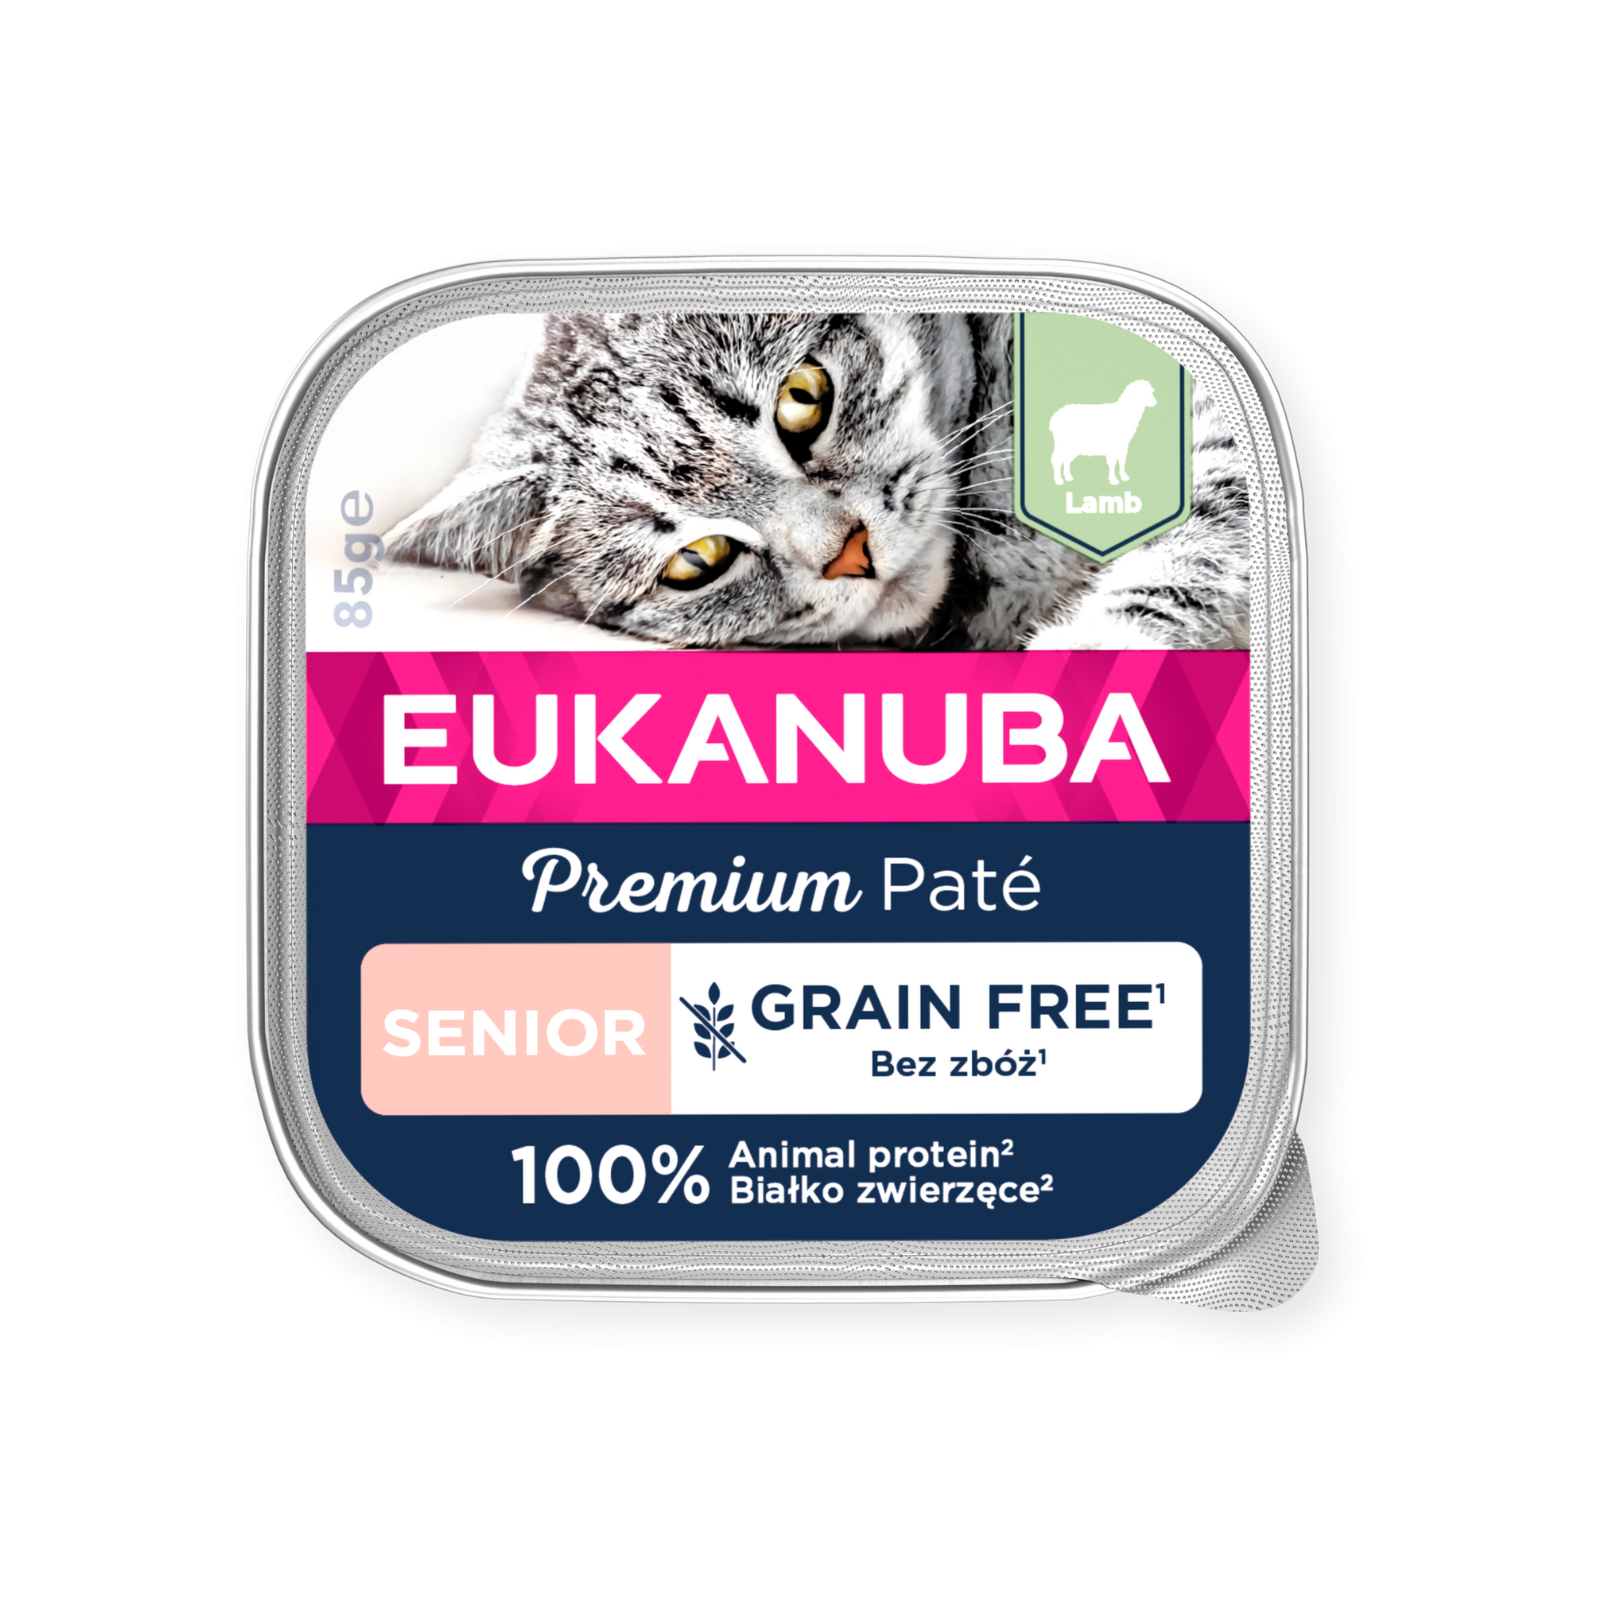 Eukanuba Senior getreidefreies Nassfutter reich an Lamm für ältere Katzen